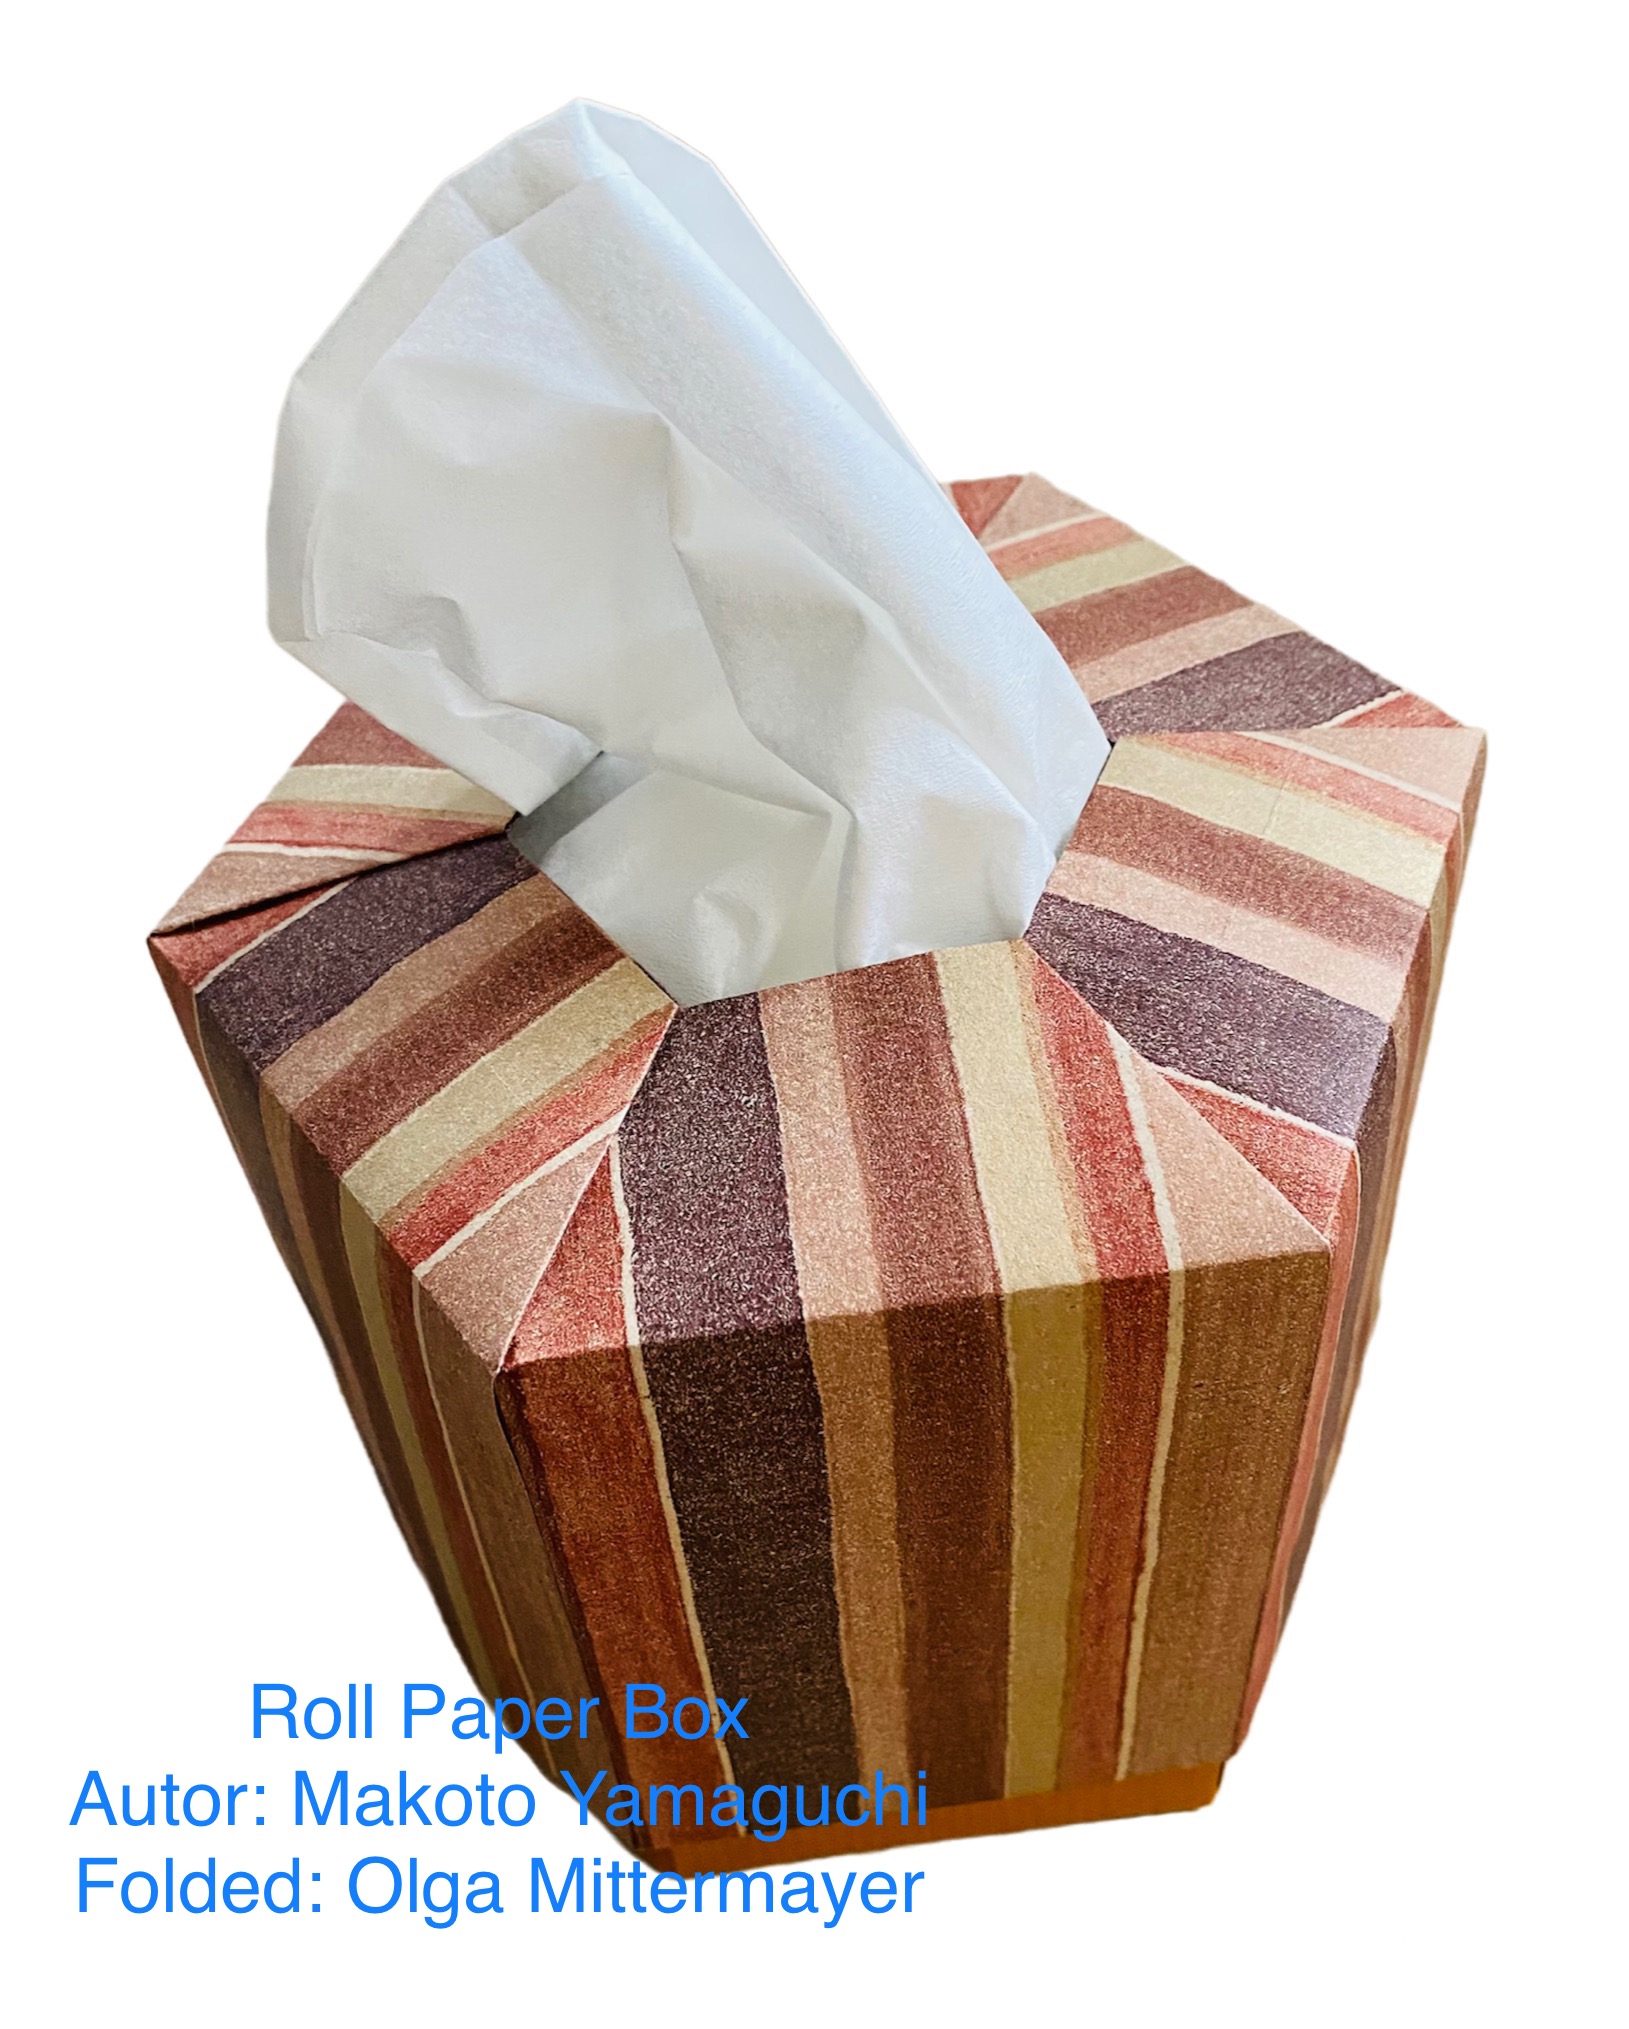 2022/09/27(Tue) 00:12「Roll Paper box」Olga Mittermayer 
（創作者 Author：Makoto Yamaguchi ,　製作者 Folder：Olga Mittermayer ,　出典 Source：Practícal Origami Book ）
 